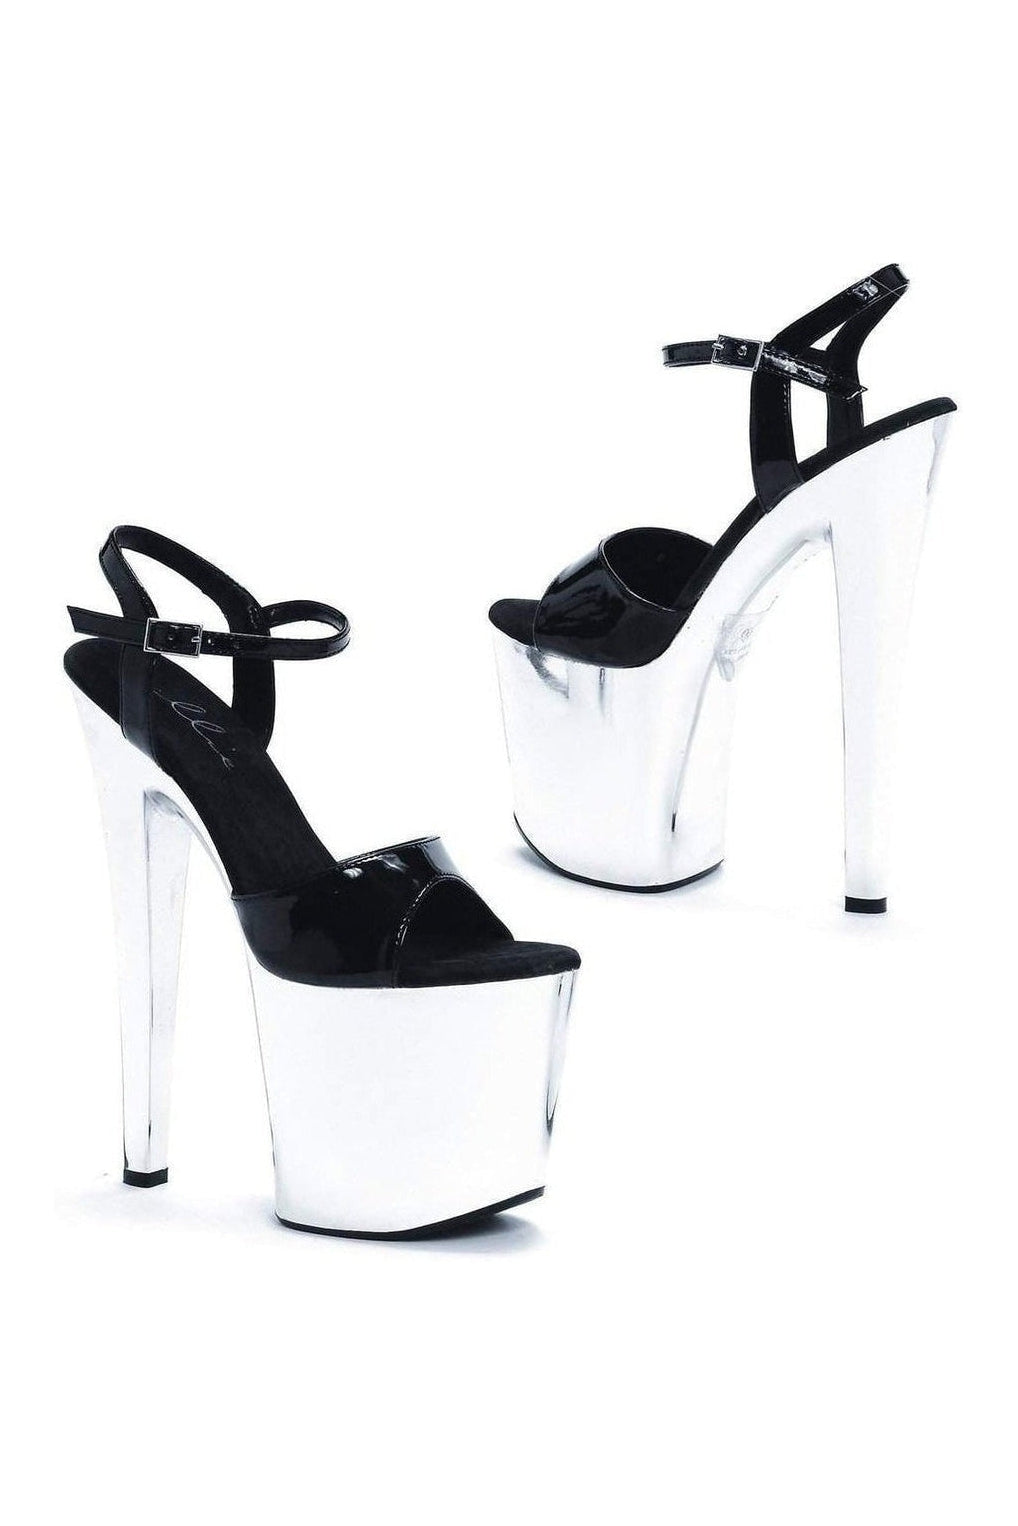 Ellie Shoes Multi Sandals Platform Stripper Shoes | Buy at Sexyshoes.com